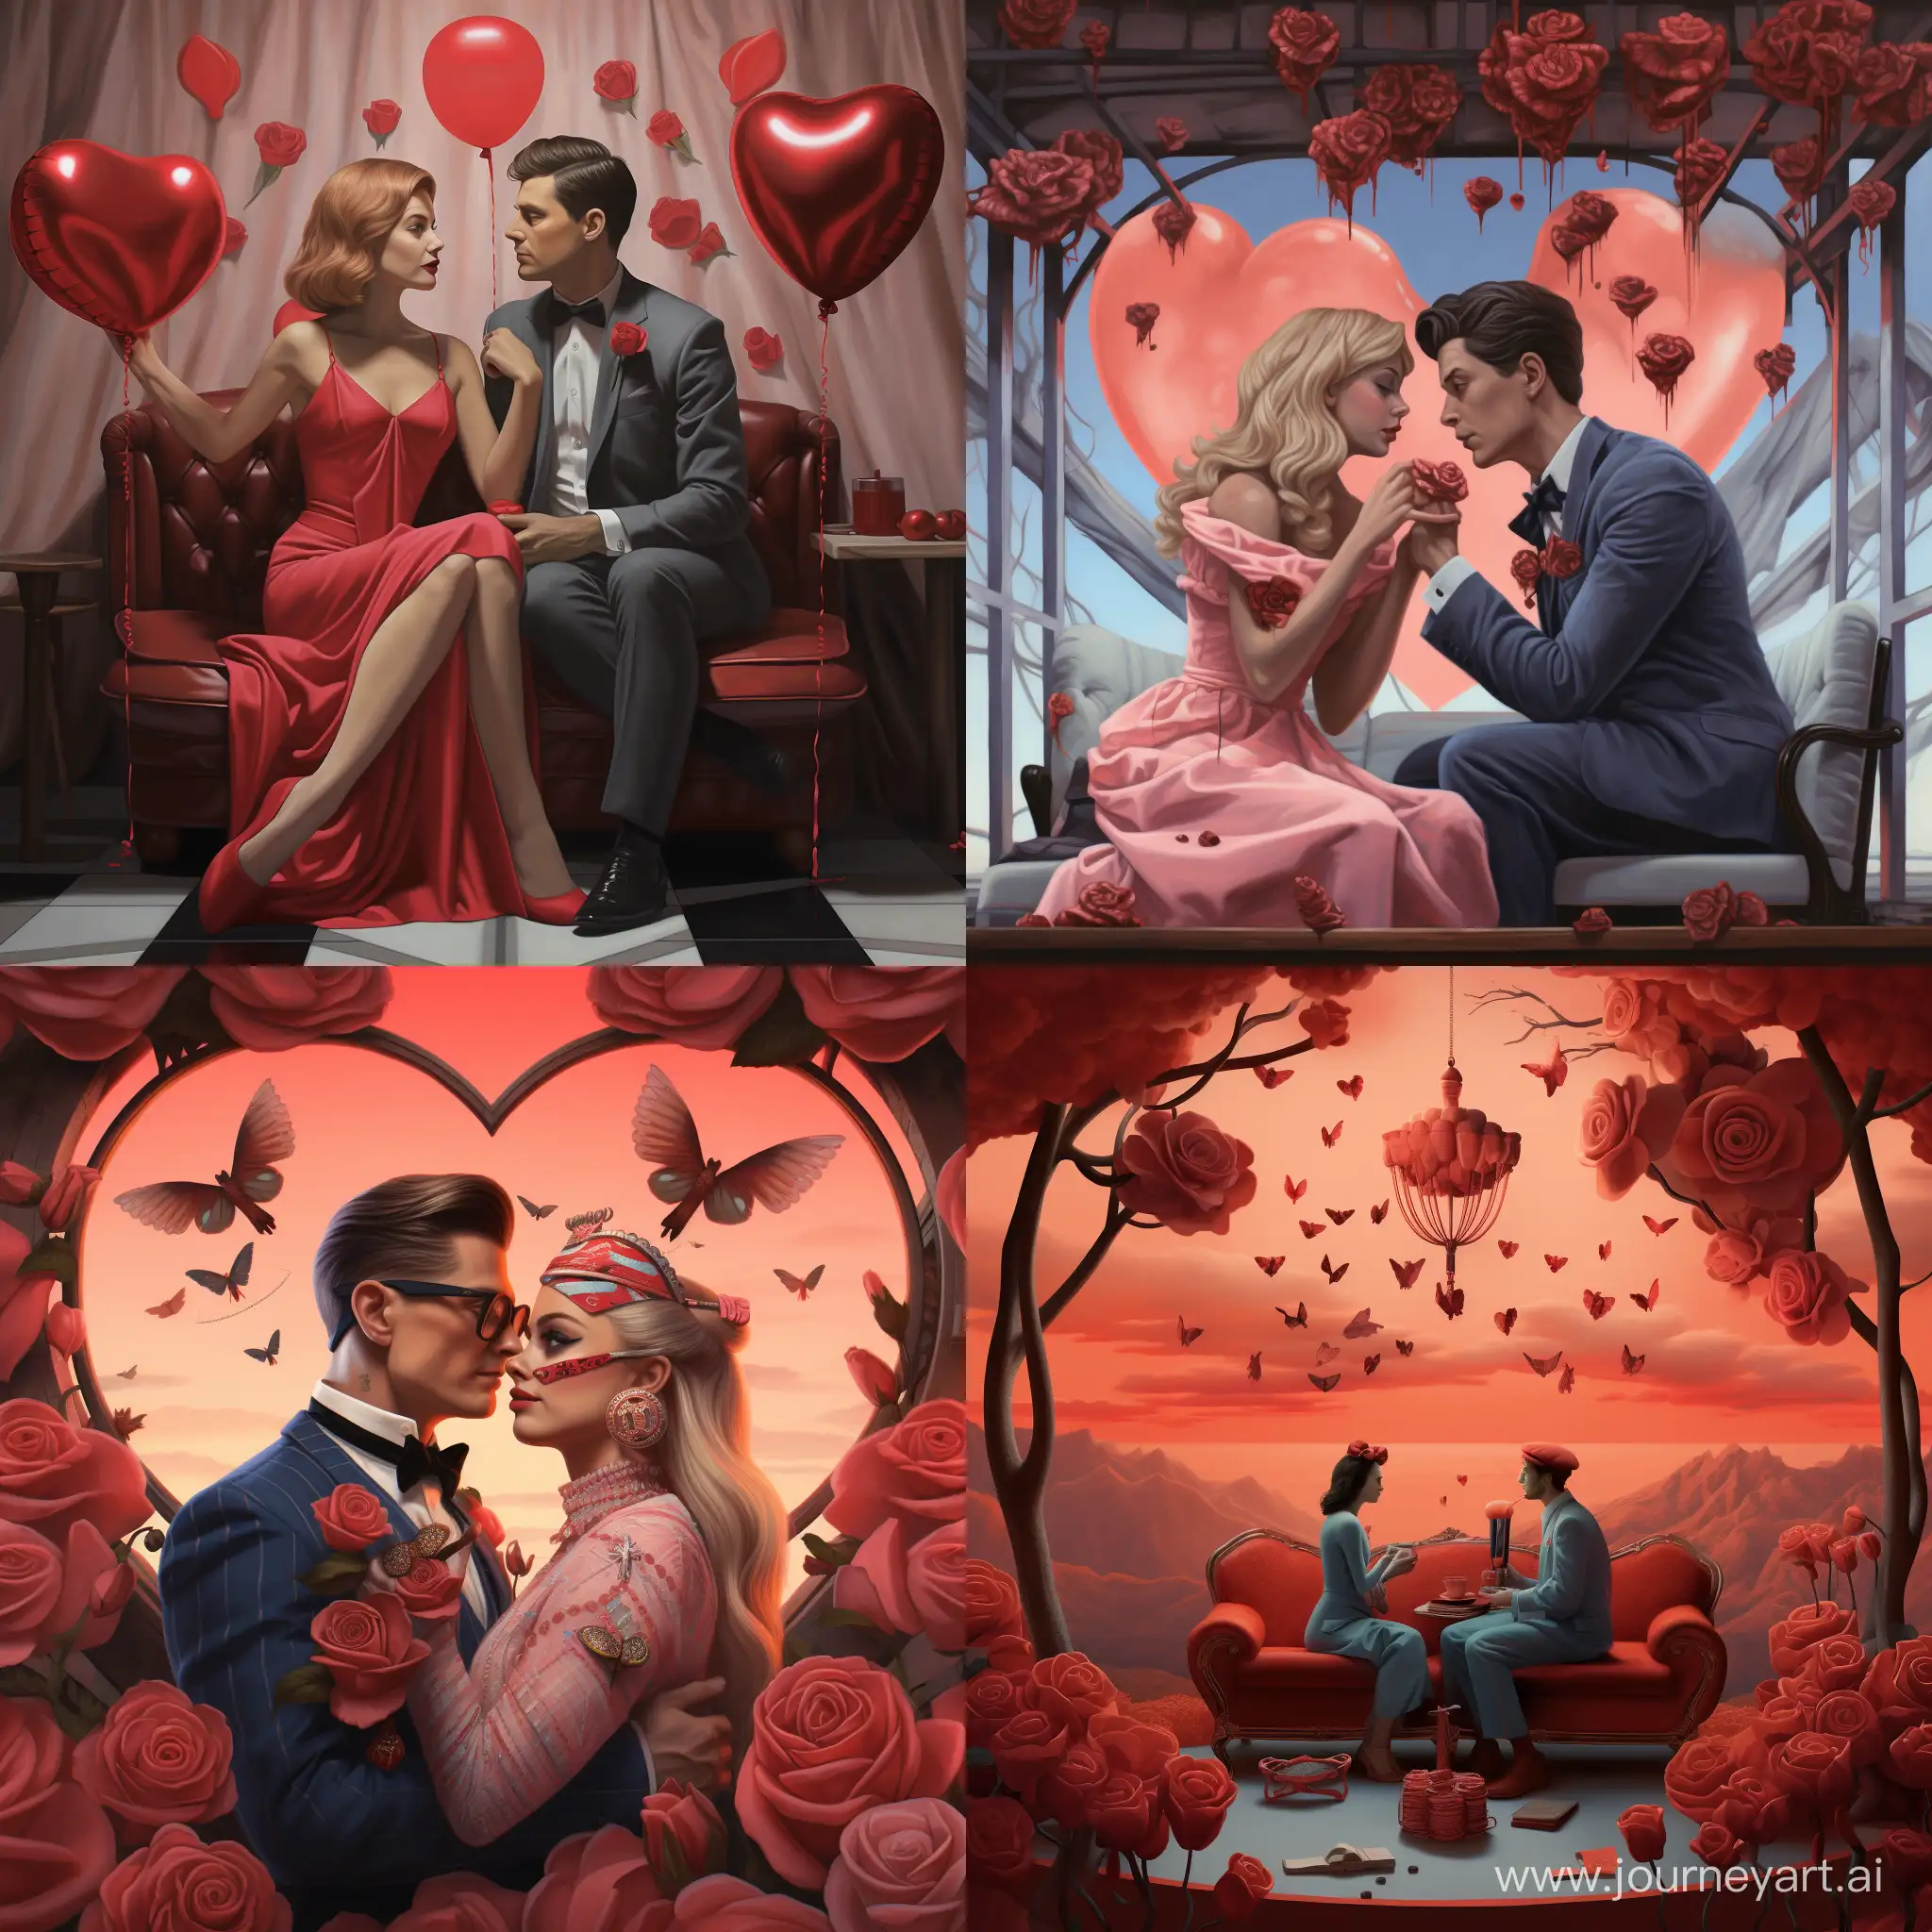 Romantic-Valentines-Day-Couple-Portrait